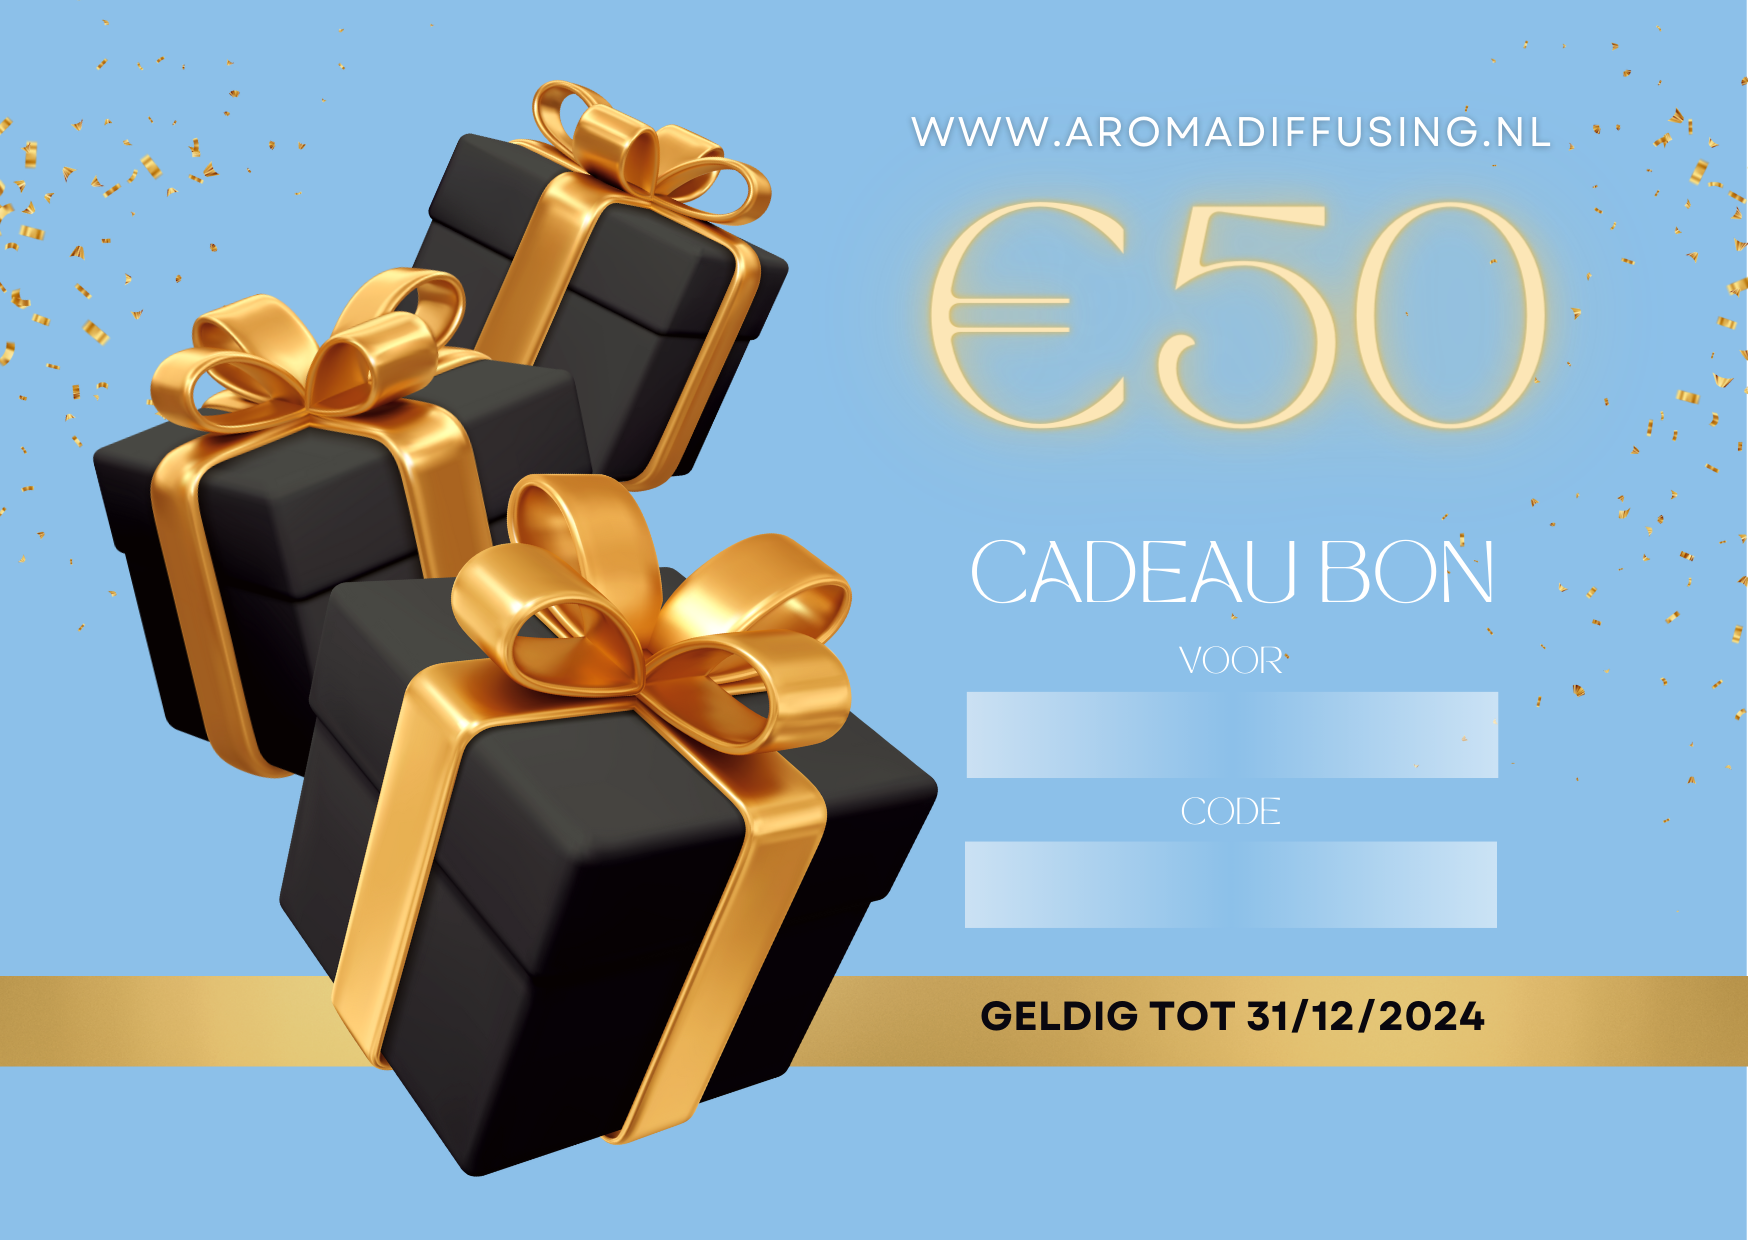 AromaDiffusing Cadeau Bon €50